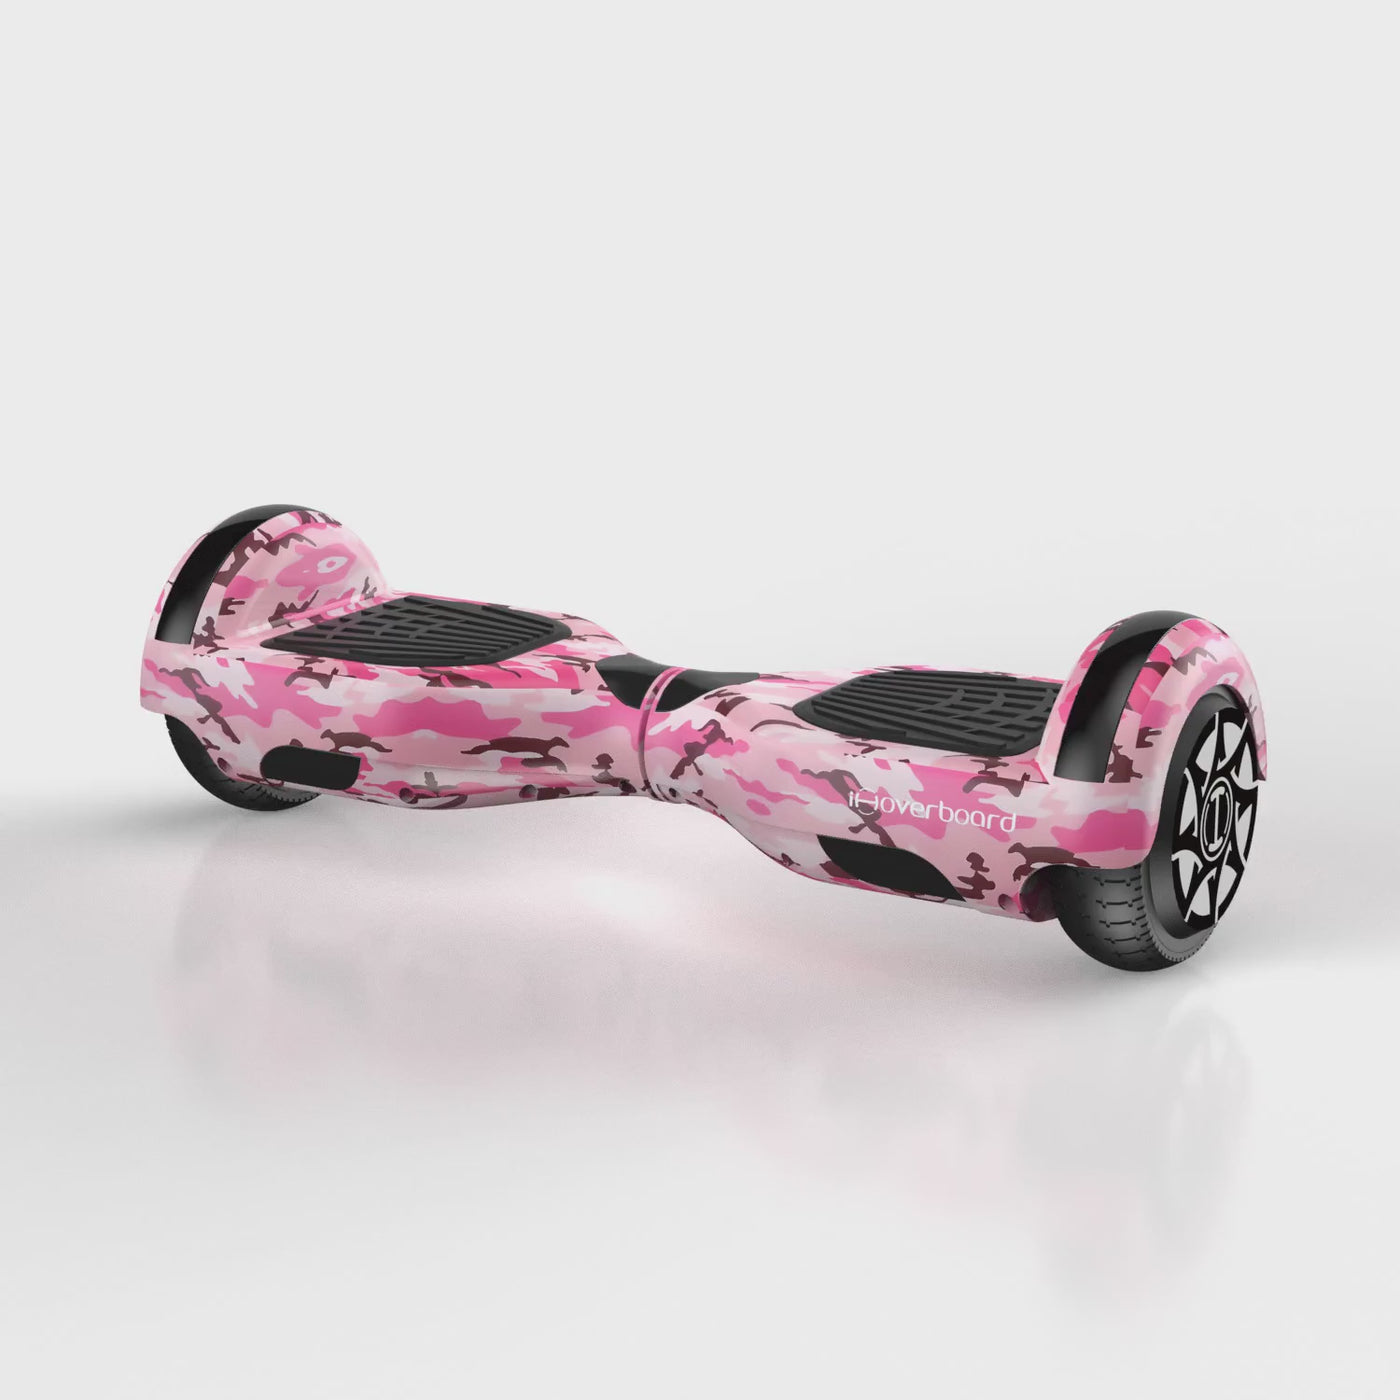 H1 Rosa Hoverboard Und Hoverboard mit sitz 700W